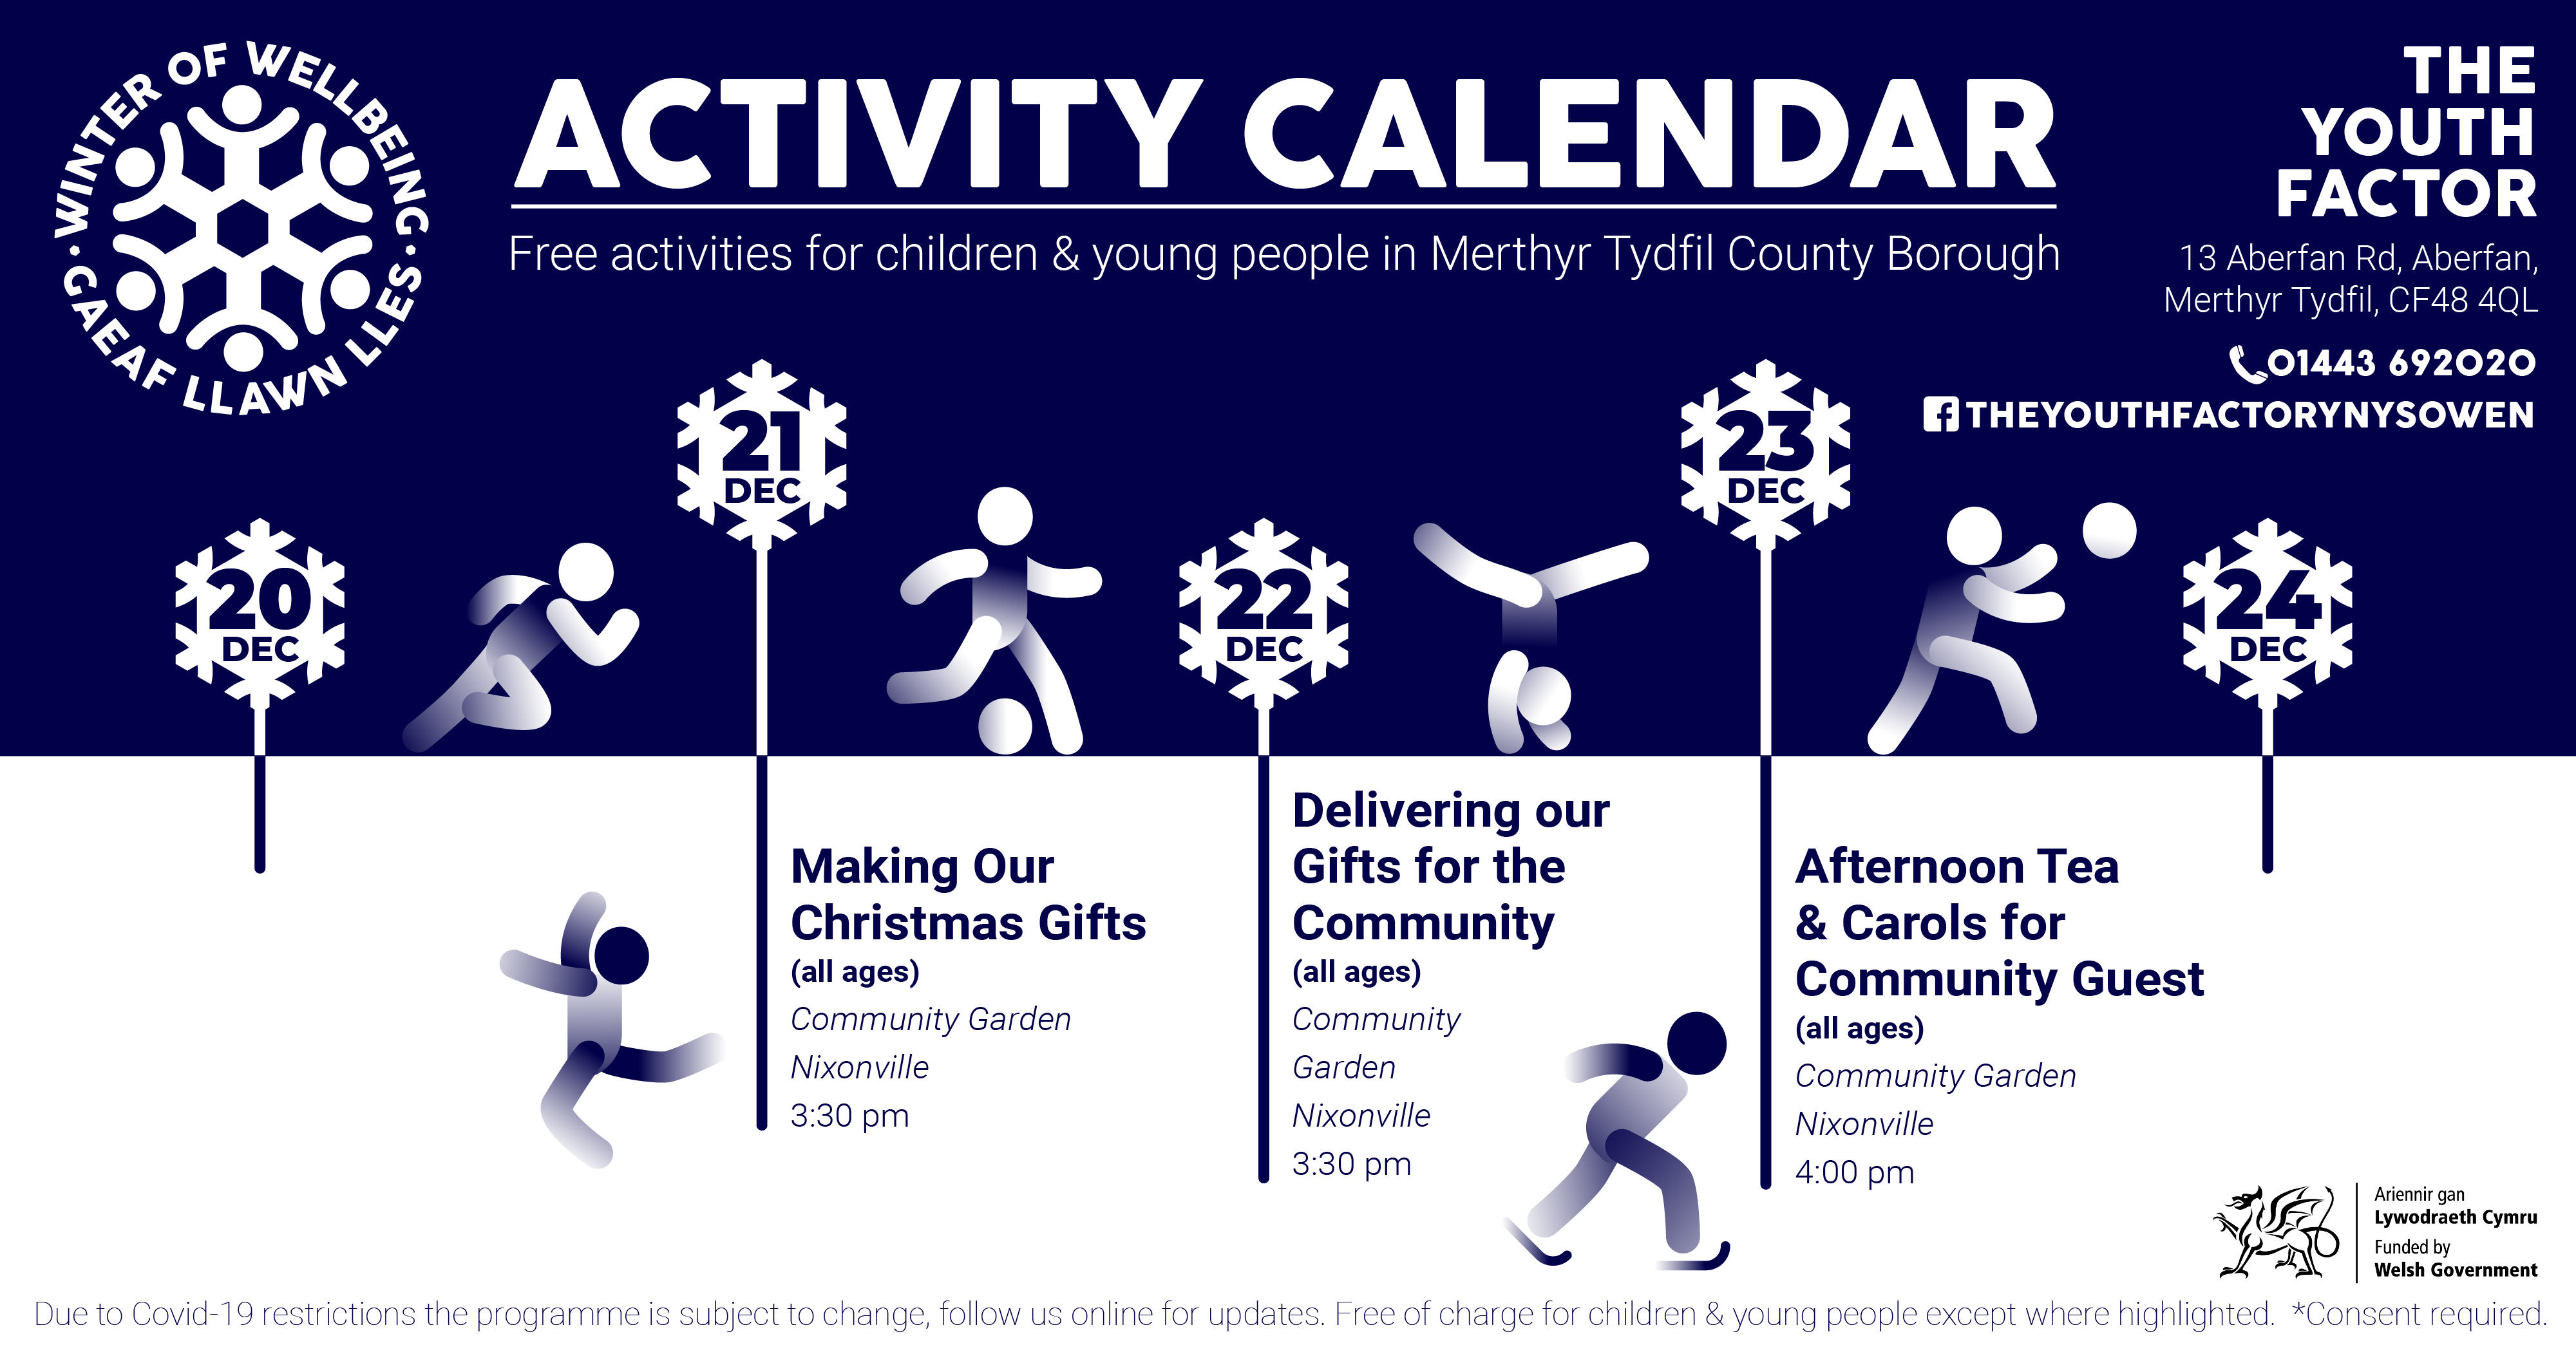 The Youth Factor Week 2 Activity Calendar